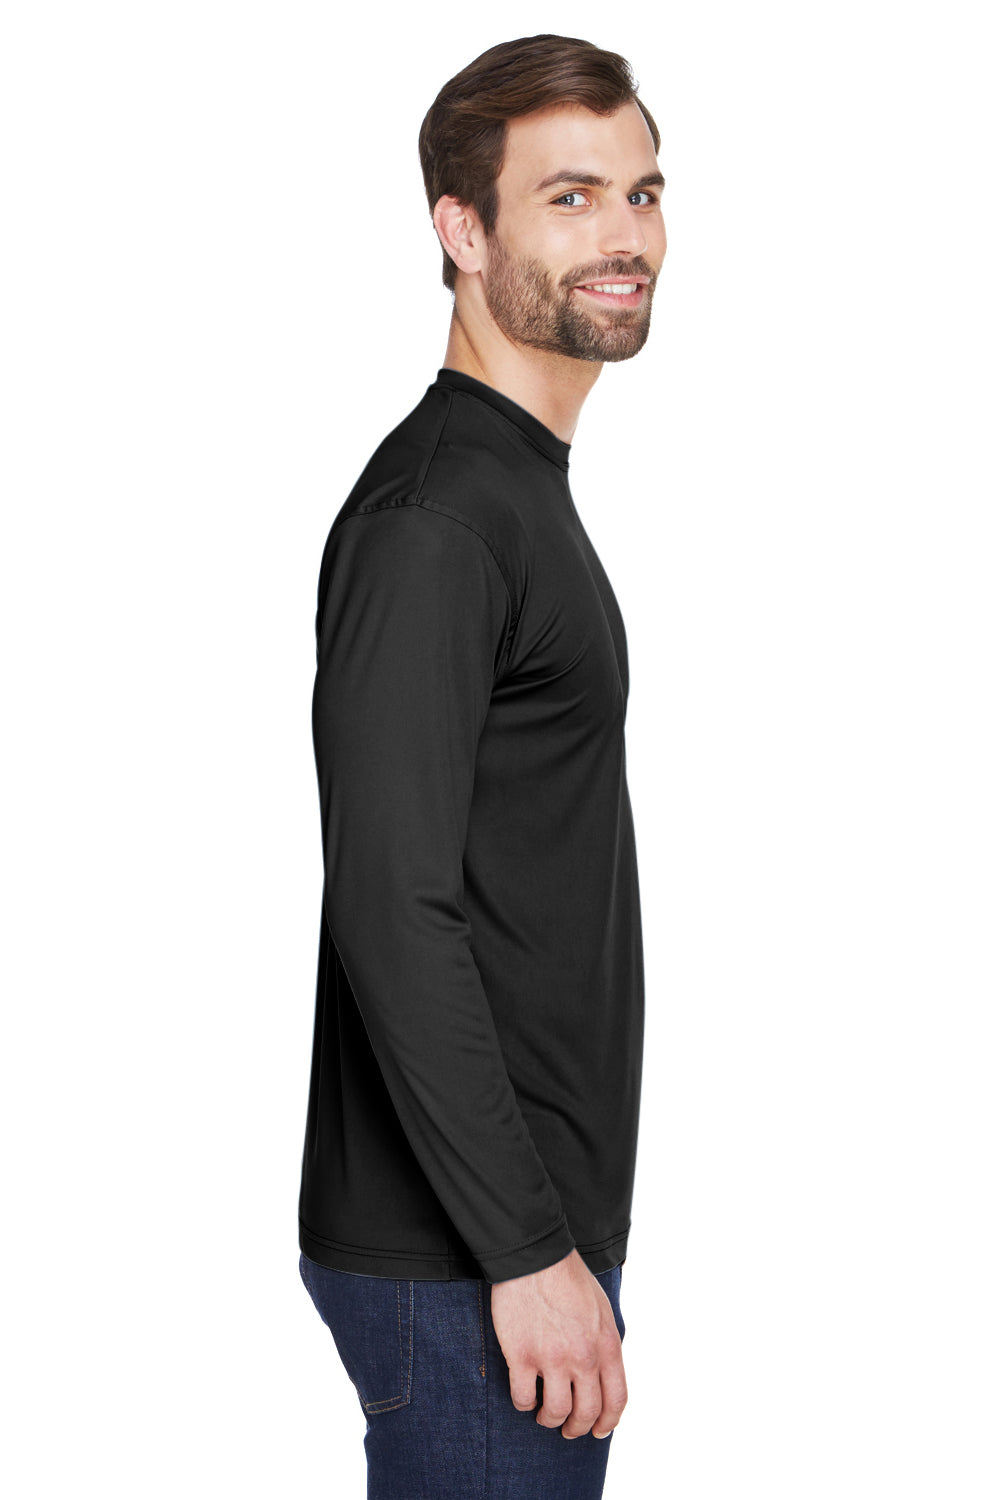 UltraClub 8422 Mens Cool & Dry Performance Moisture Wicking Long Sleeve Crewneck T-Shirt Black Side